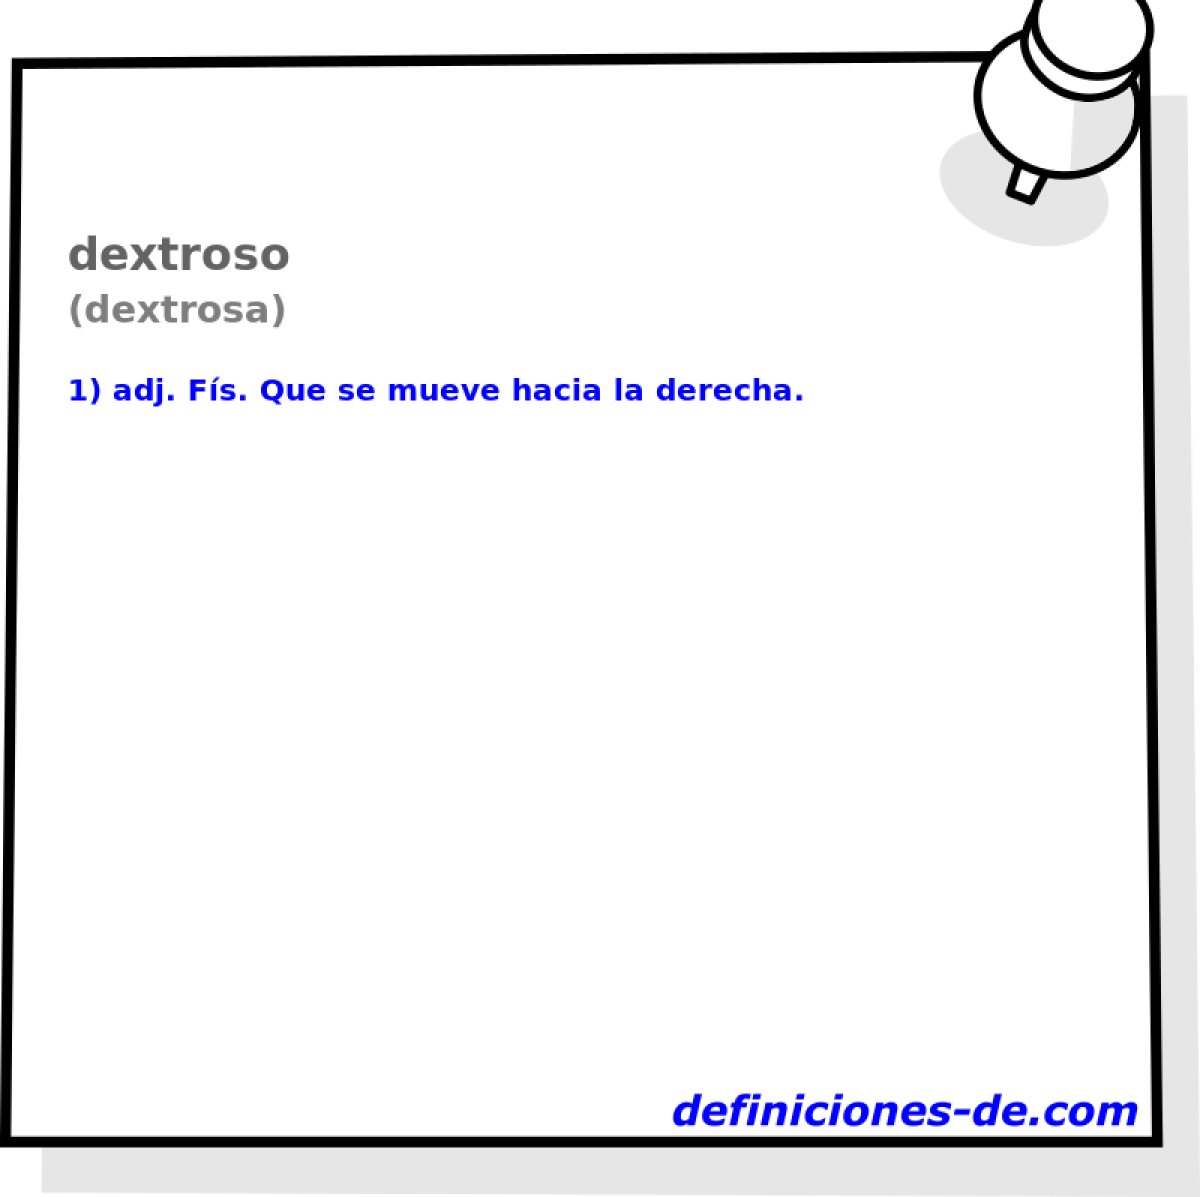 dextroso (dextrosa)